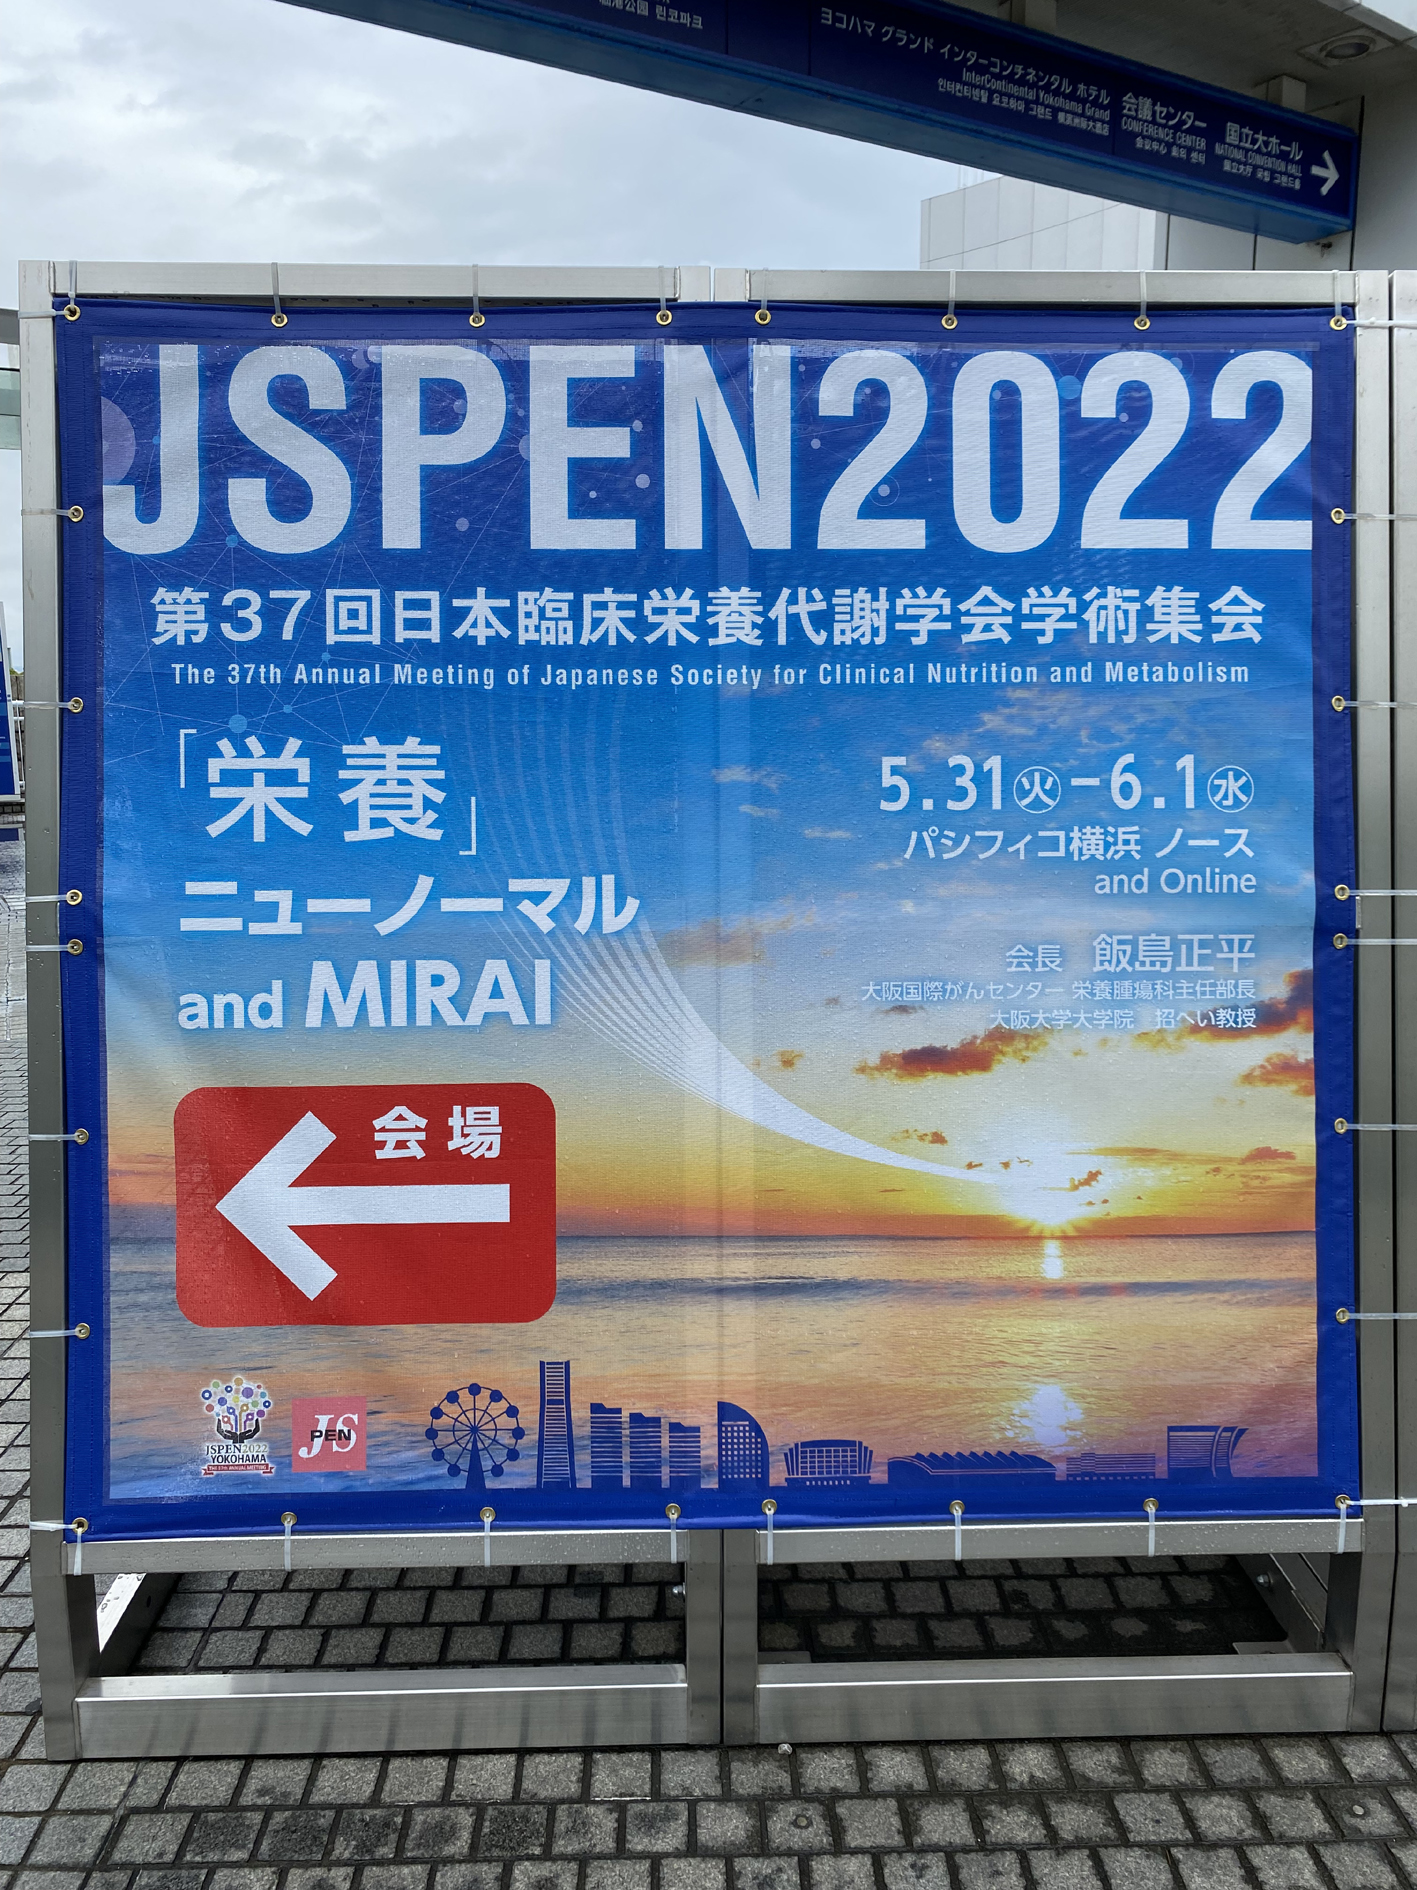 JSPEN 2022の会場となったパシフィコ横浜 ノース